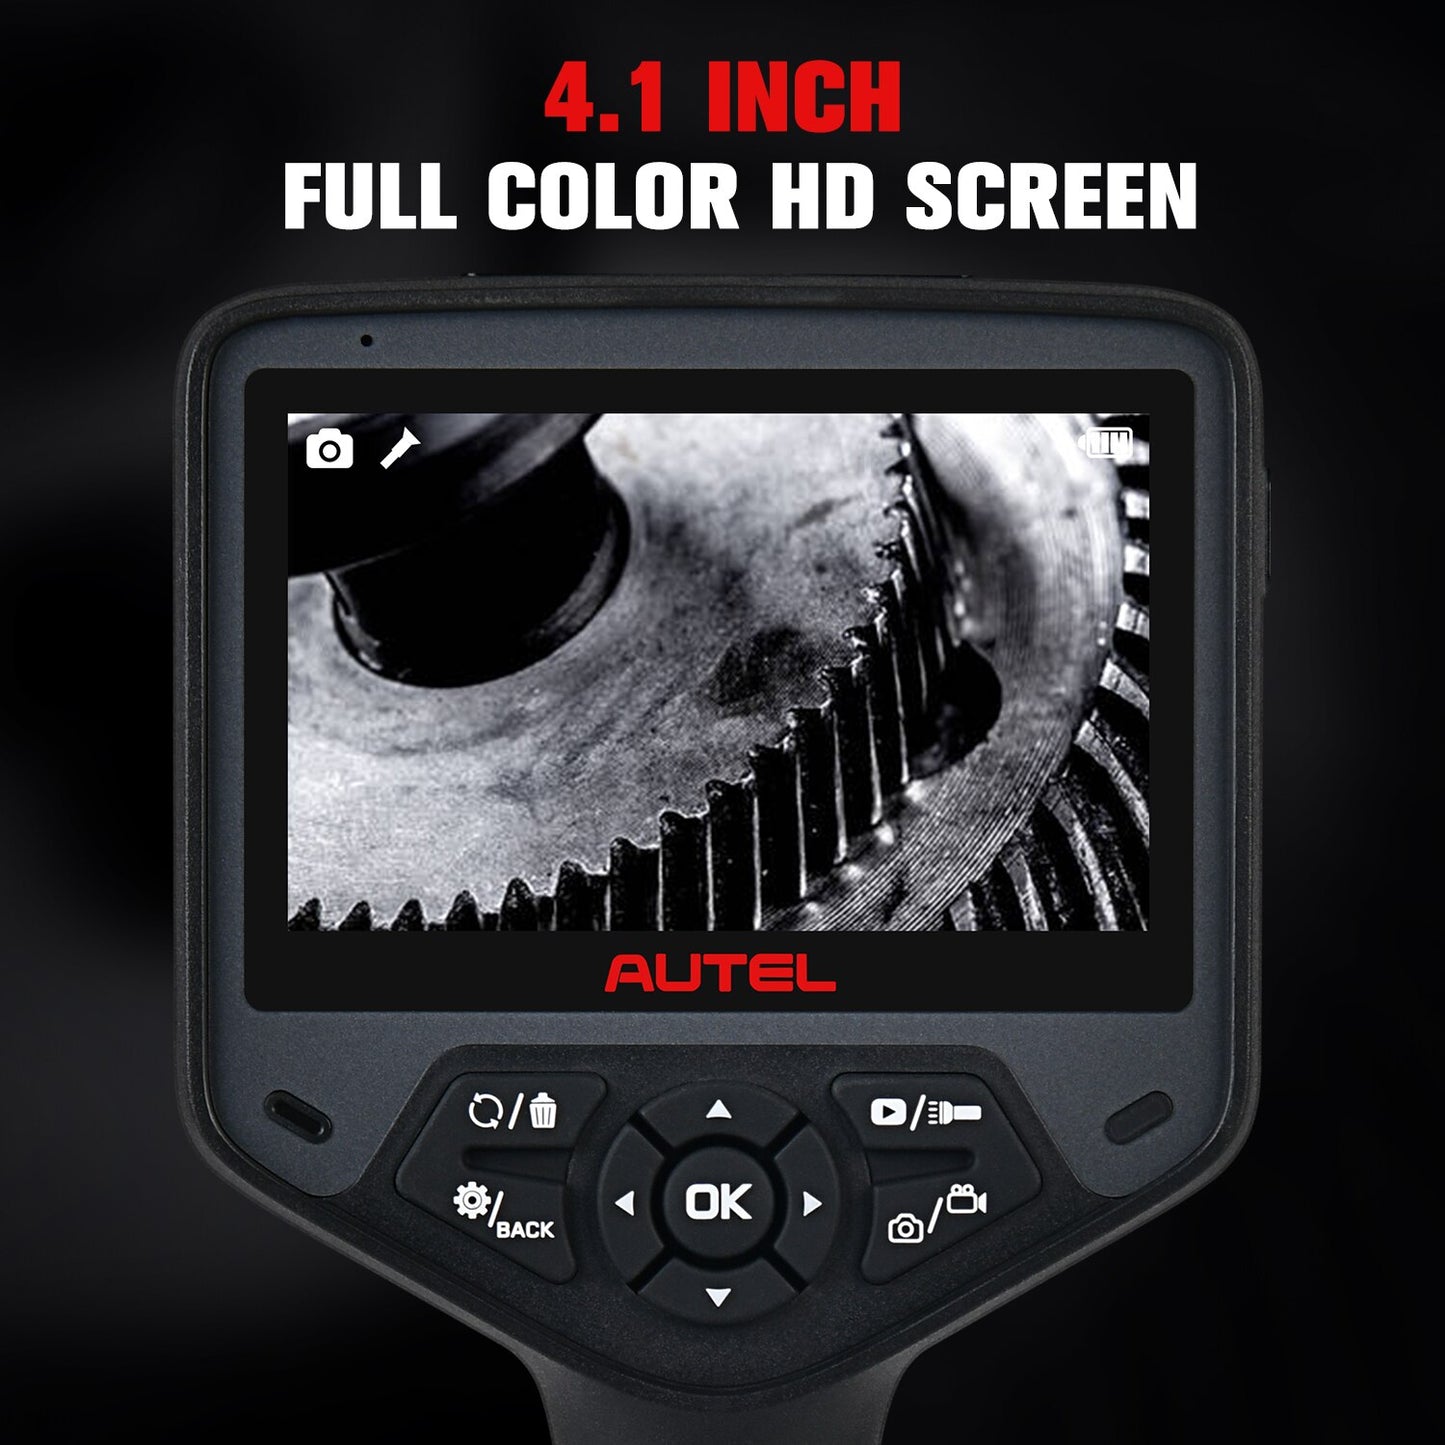 Autel Maxivideo MV480 Dual- Camera Digital Videoscope Inspection Camera Endoscope with 8.5mm Head Imager  Car/Wall